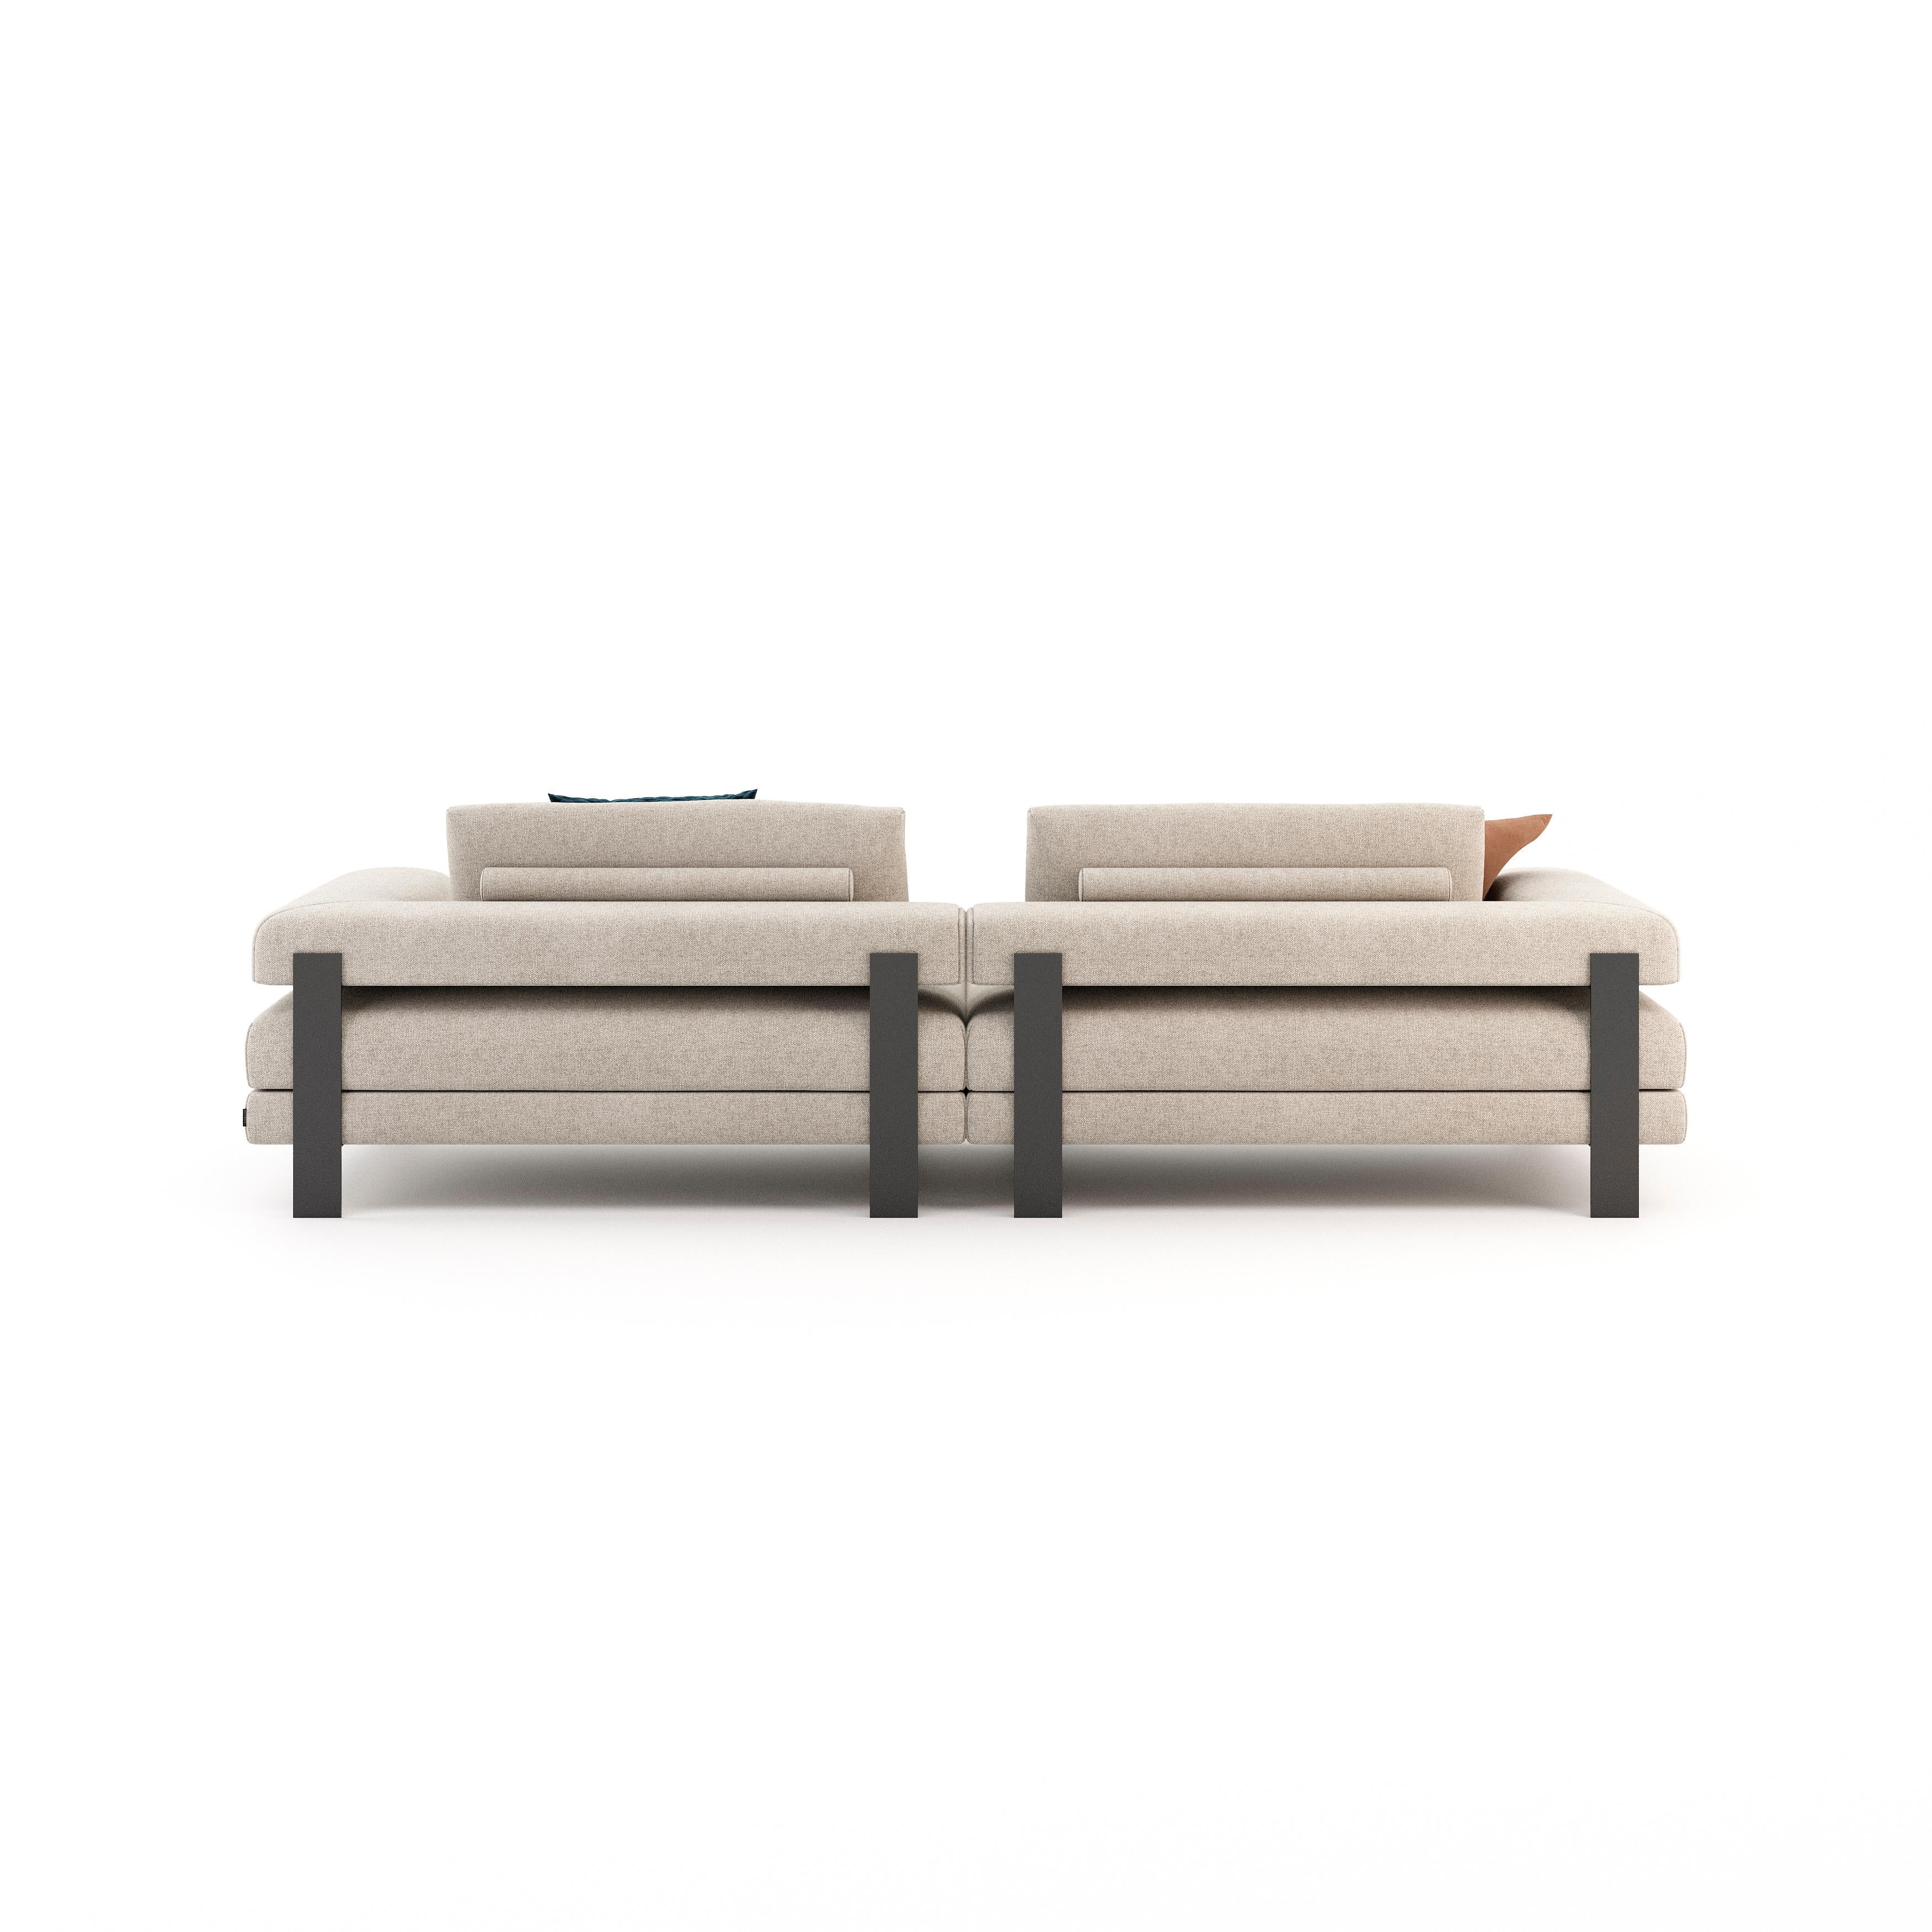 Portuguese Mid-century modern sofa with custom metallic frame by Laskasas For Sale